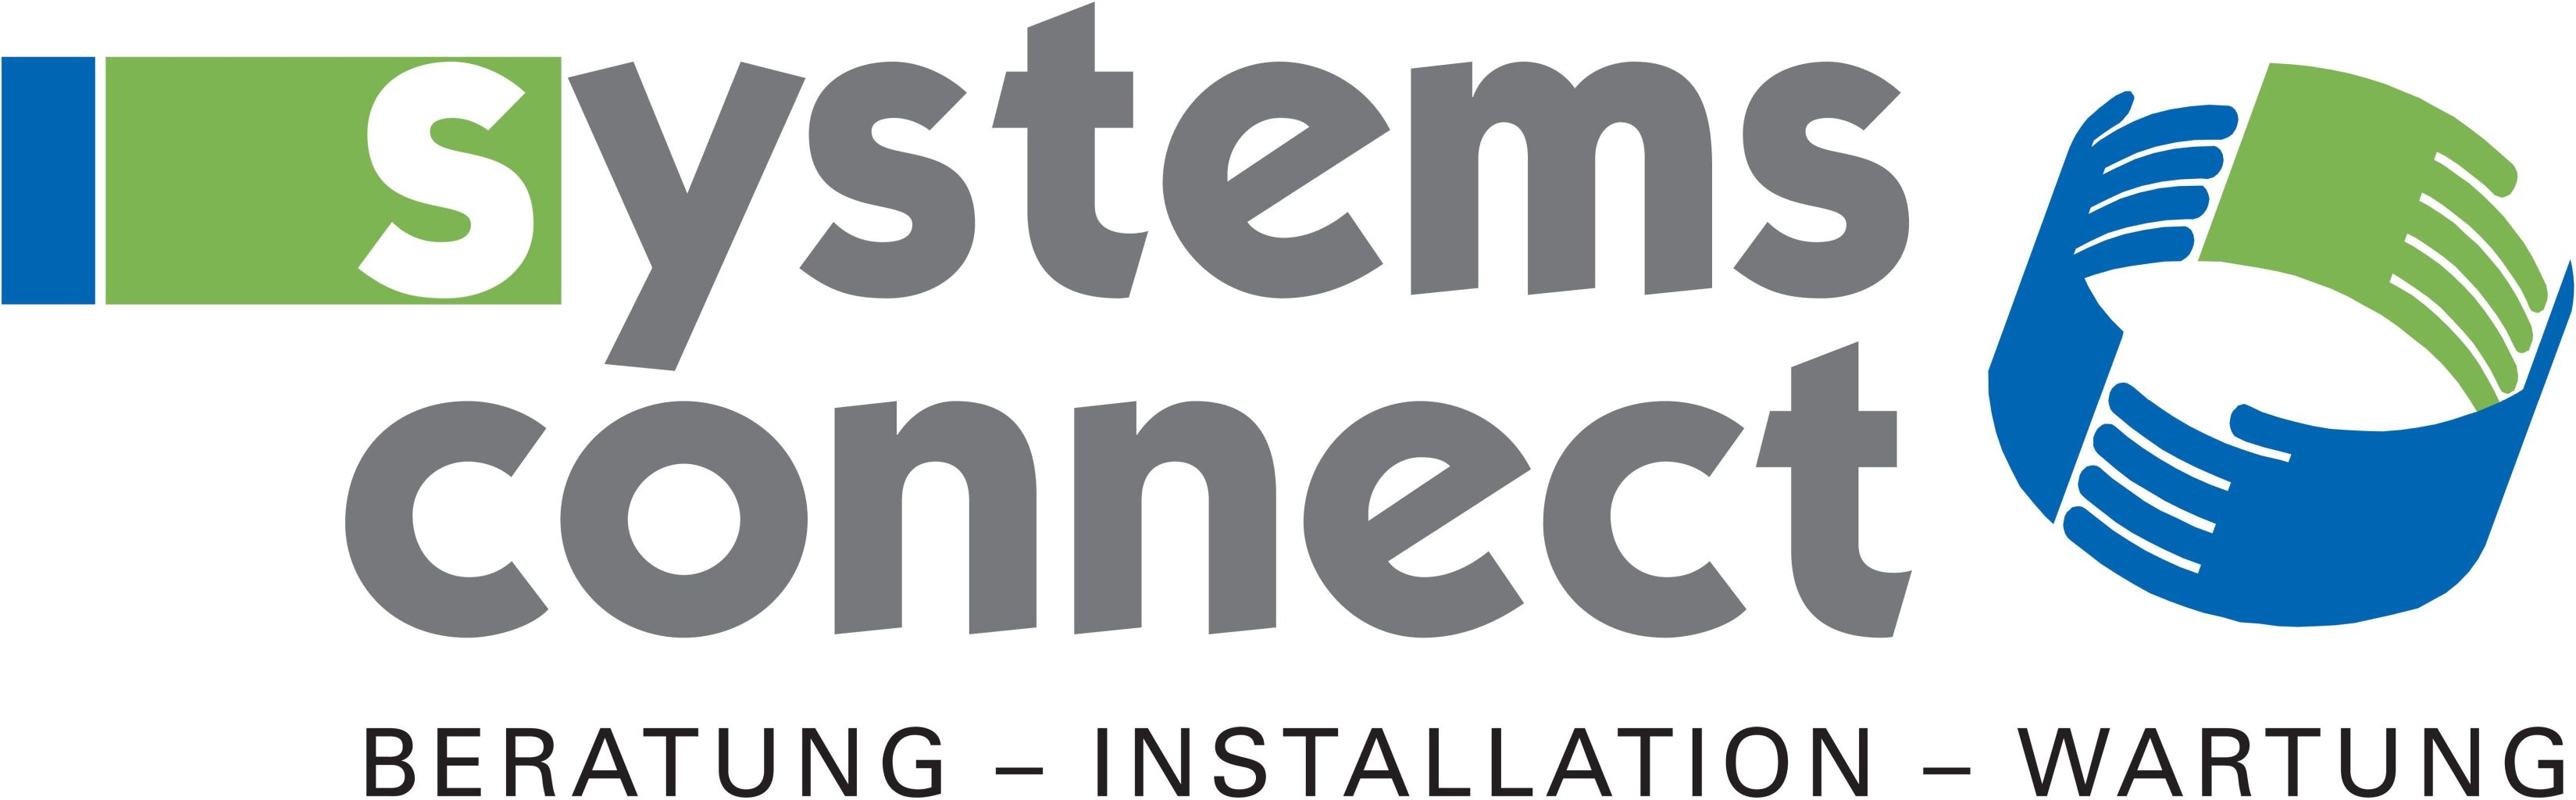 system connect_Logo.jpg